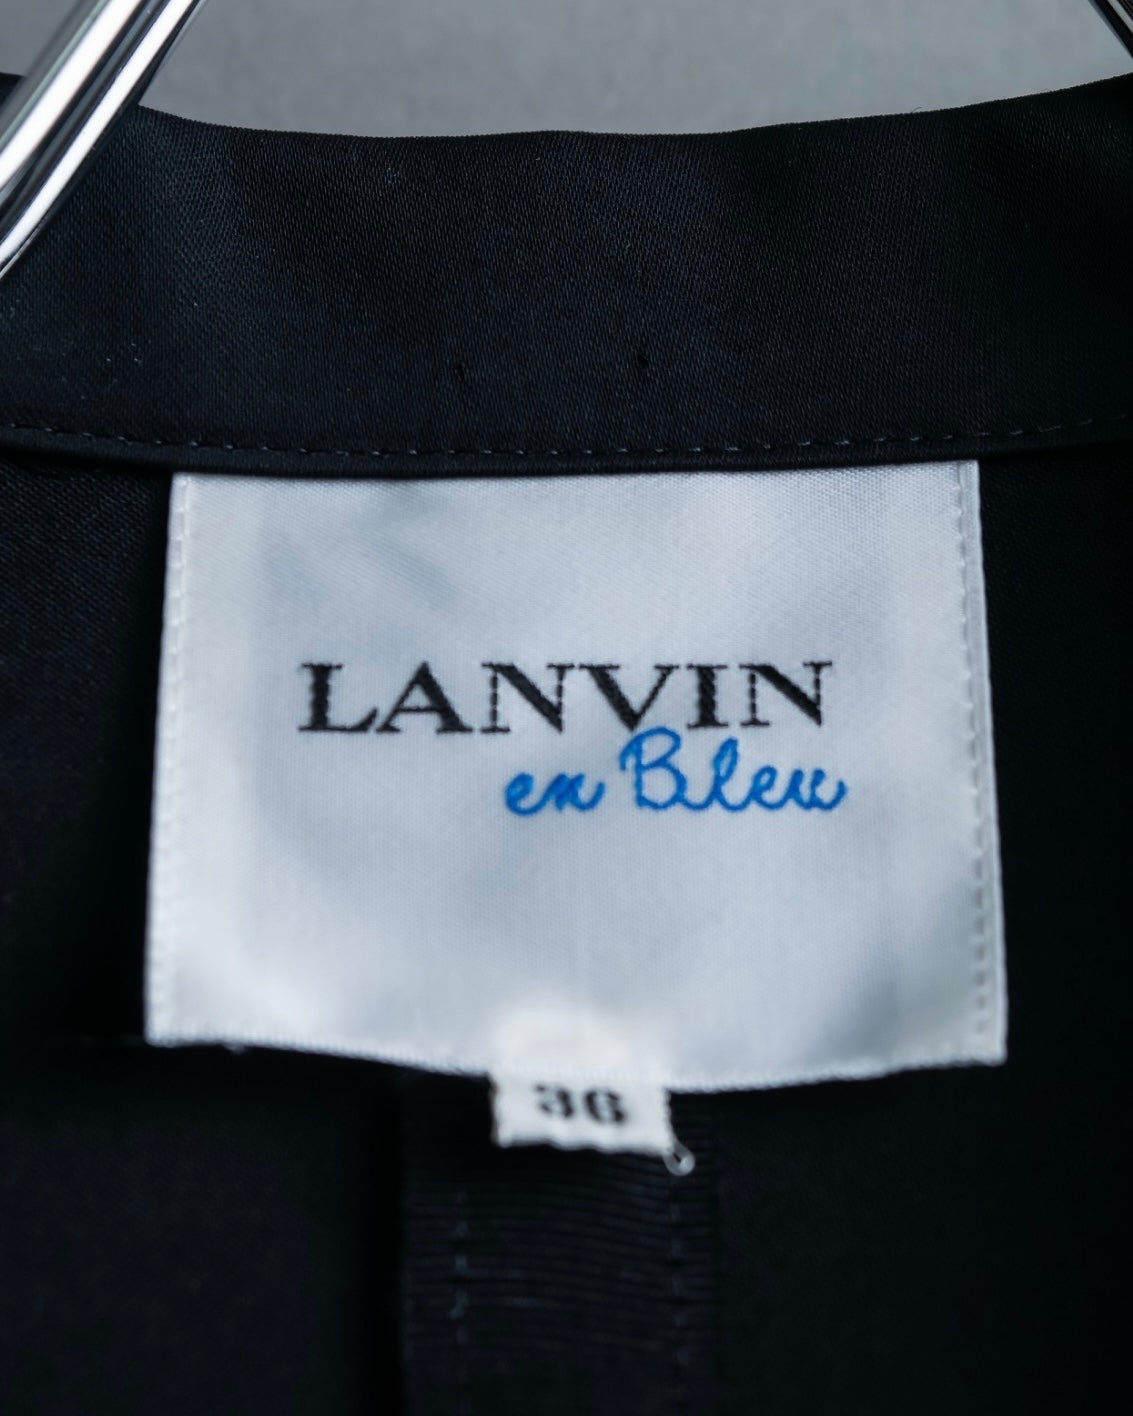 "LANVIN en Bleu" Tape-decorated tailored jacket